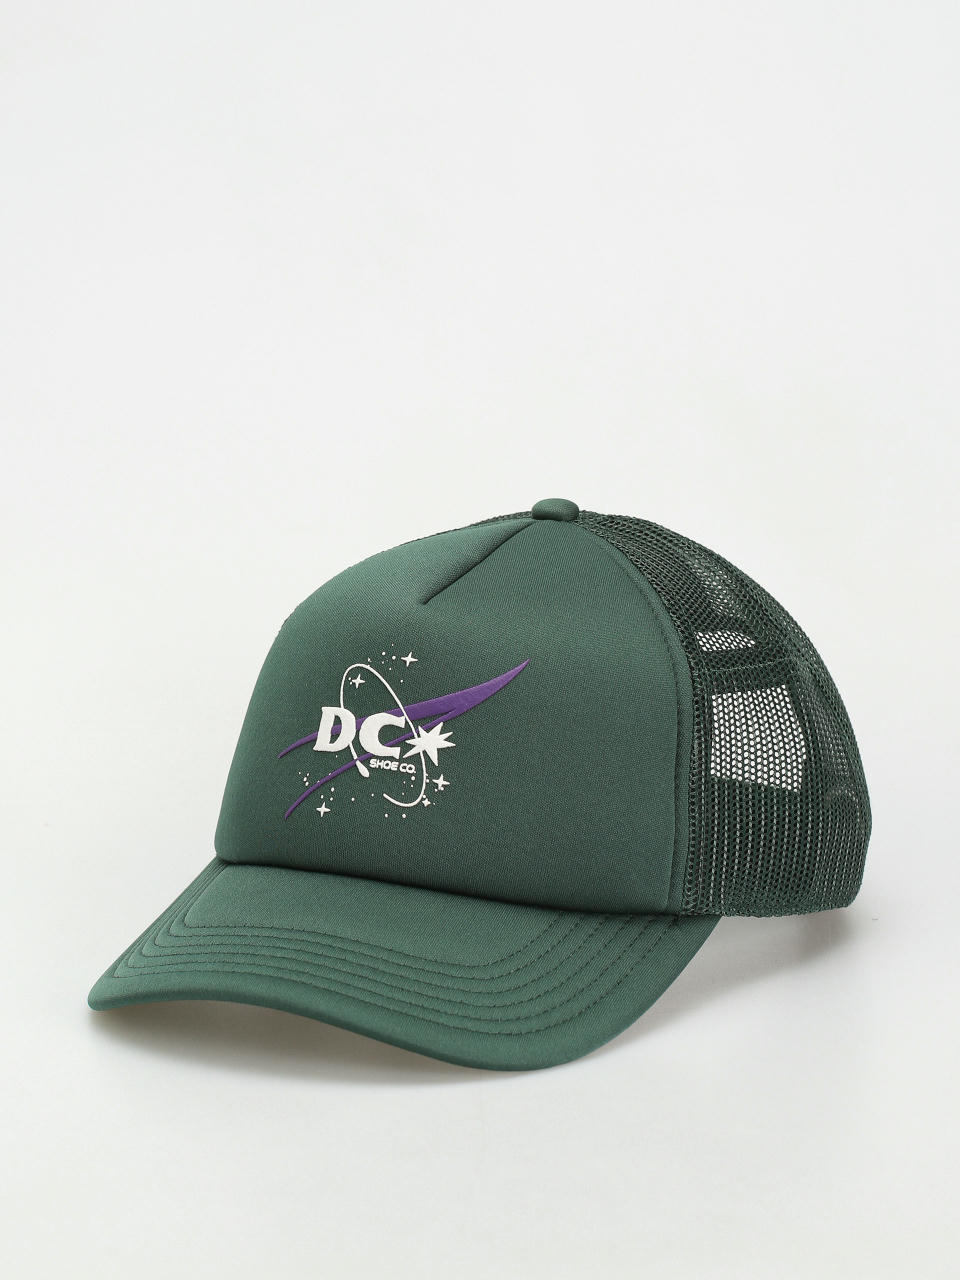 DC Dc 321 Trucker S Cap (hunter green)